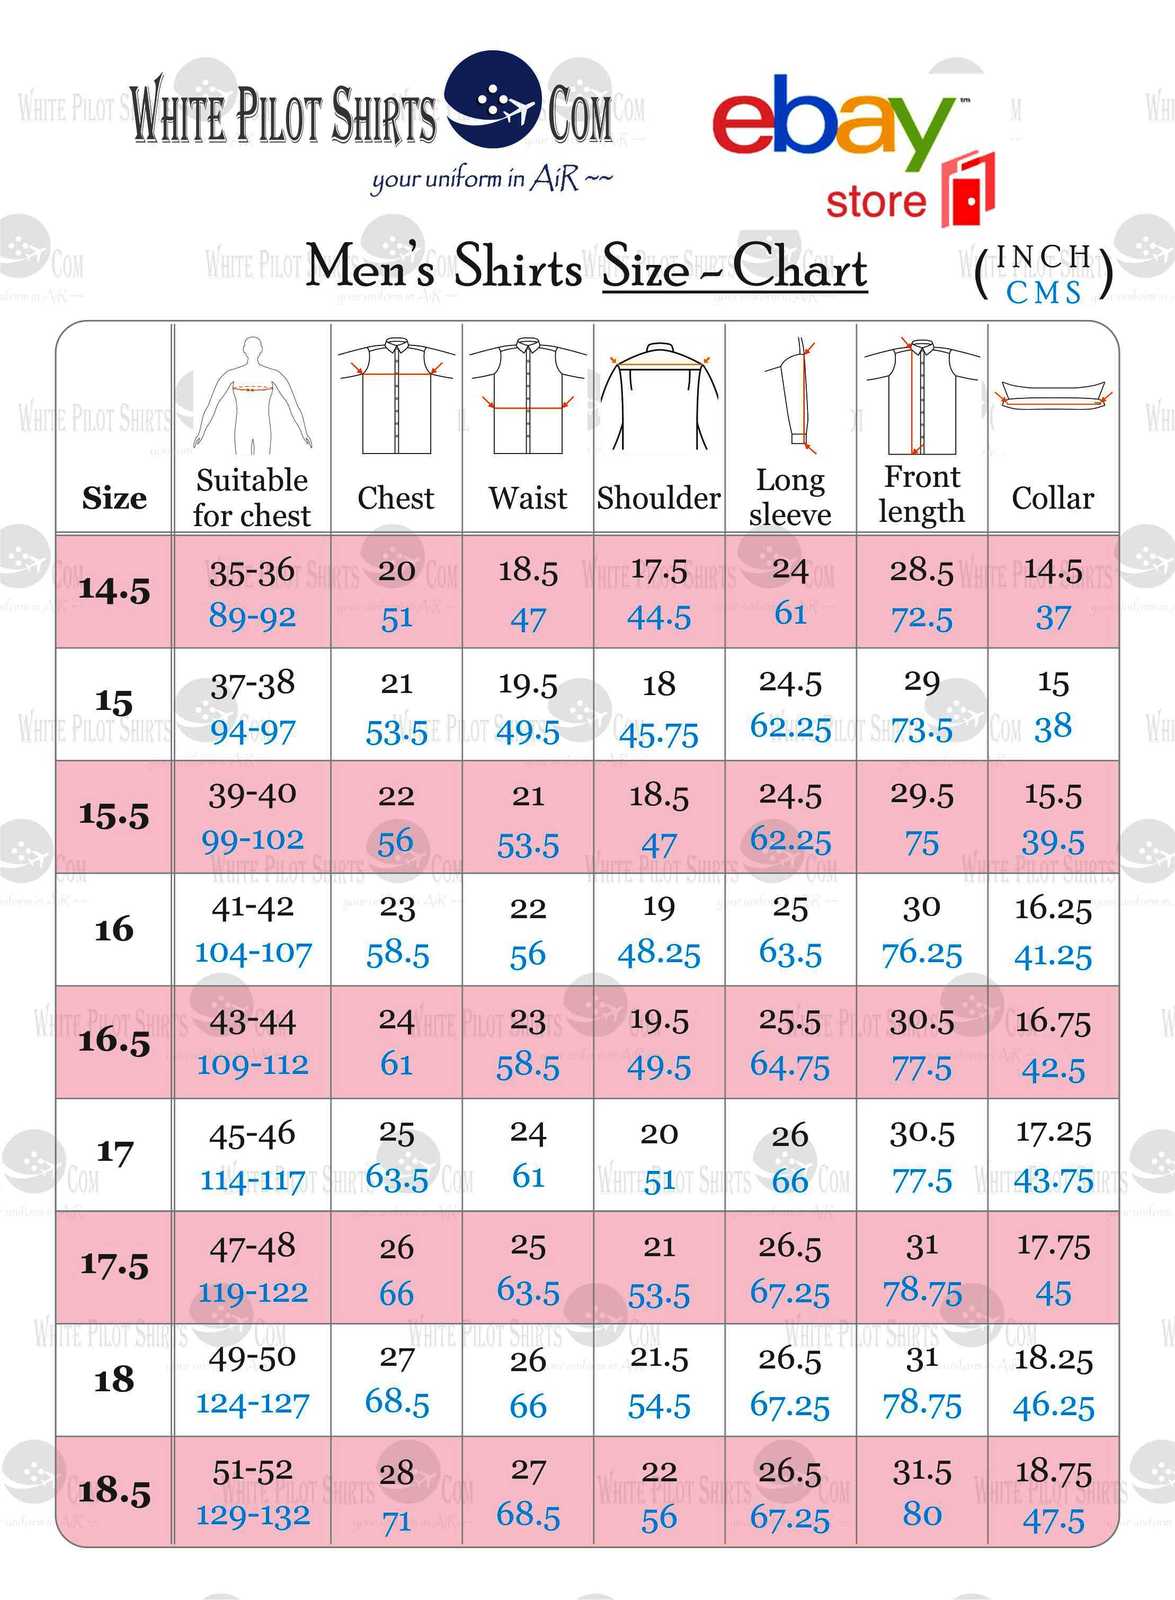 calvin klein dress size chart